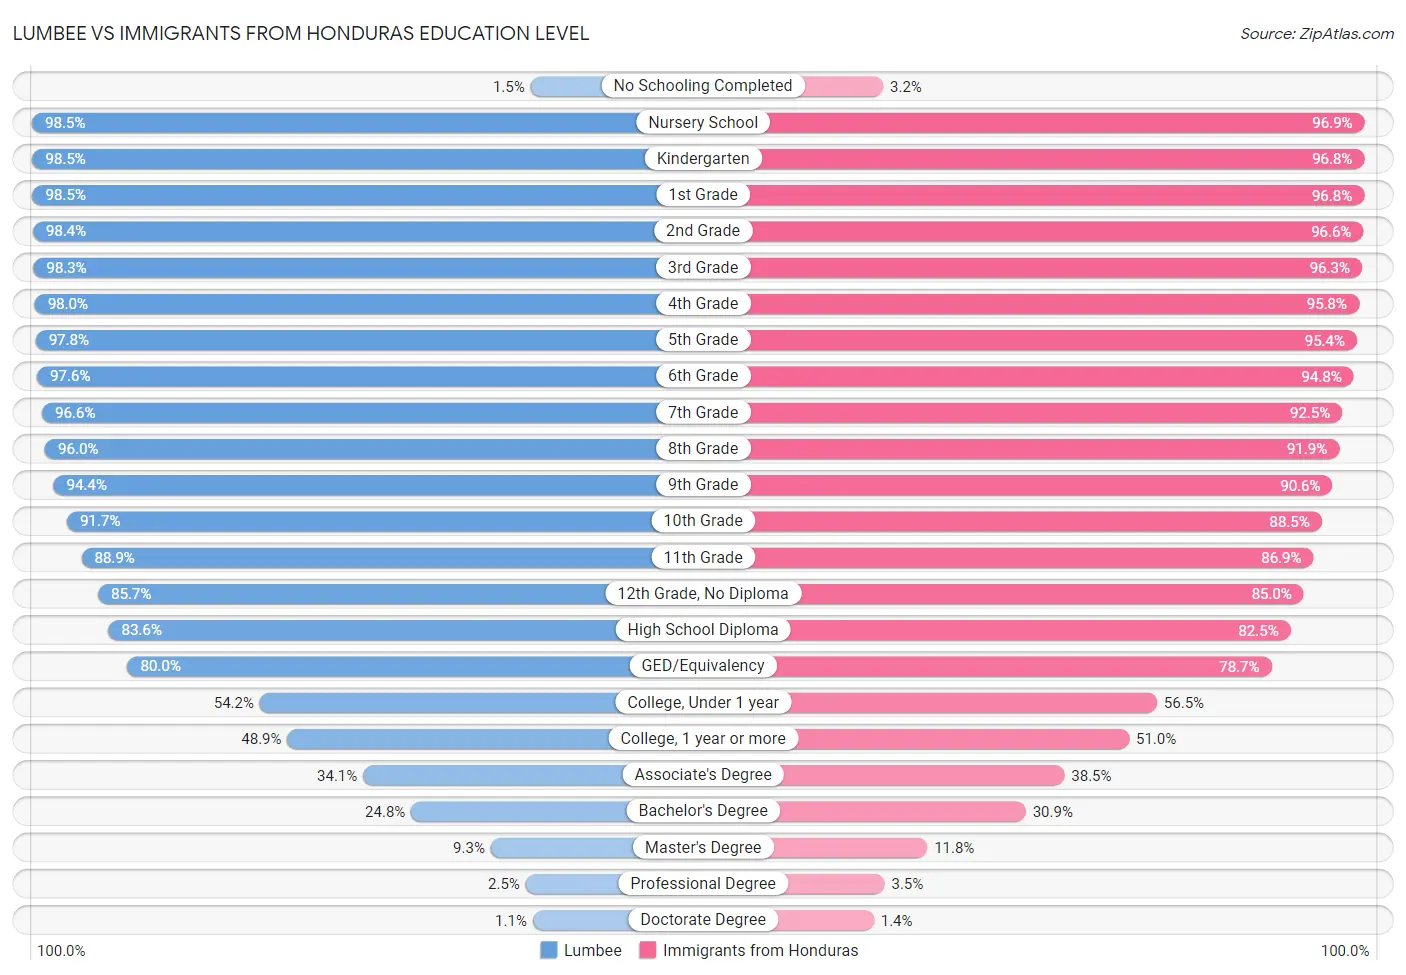 Lumbee vs Immigrants from Honduras Education Level